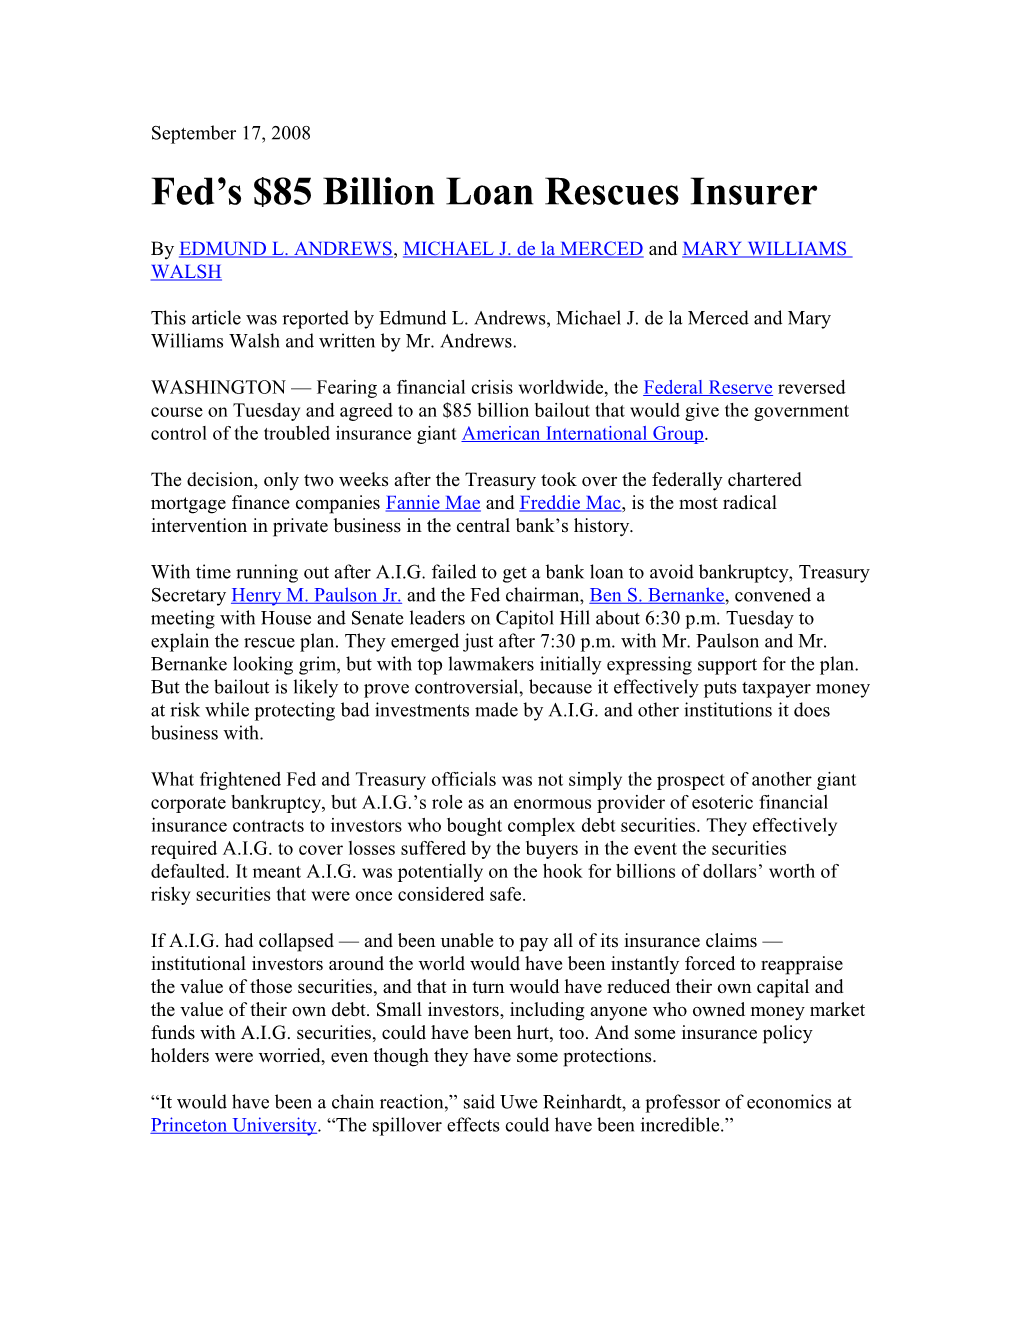 Fed S $85 Billion Loan Rescues Insurer